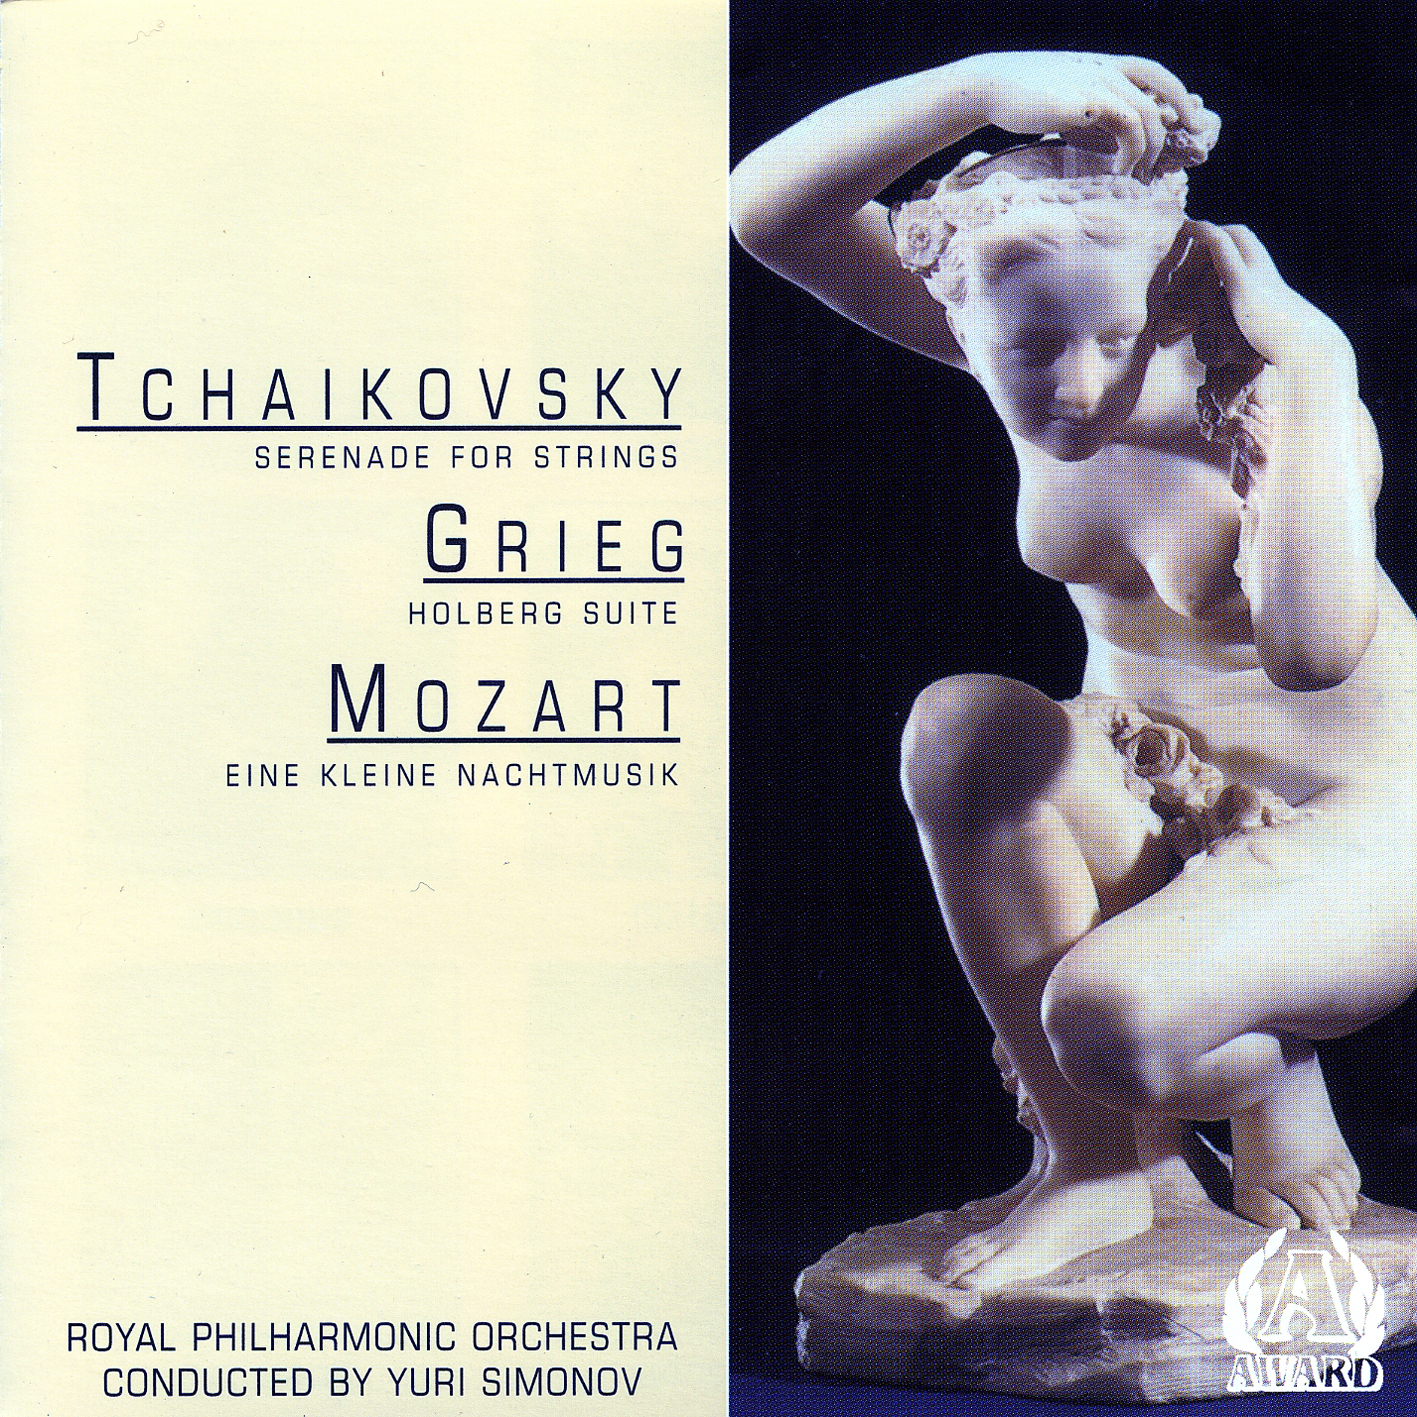 Tchaikovsky - Serenade For Strings - Finale